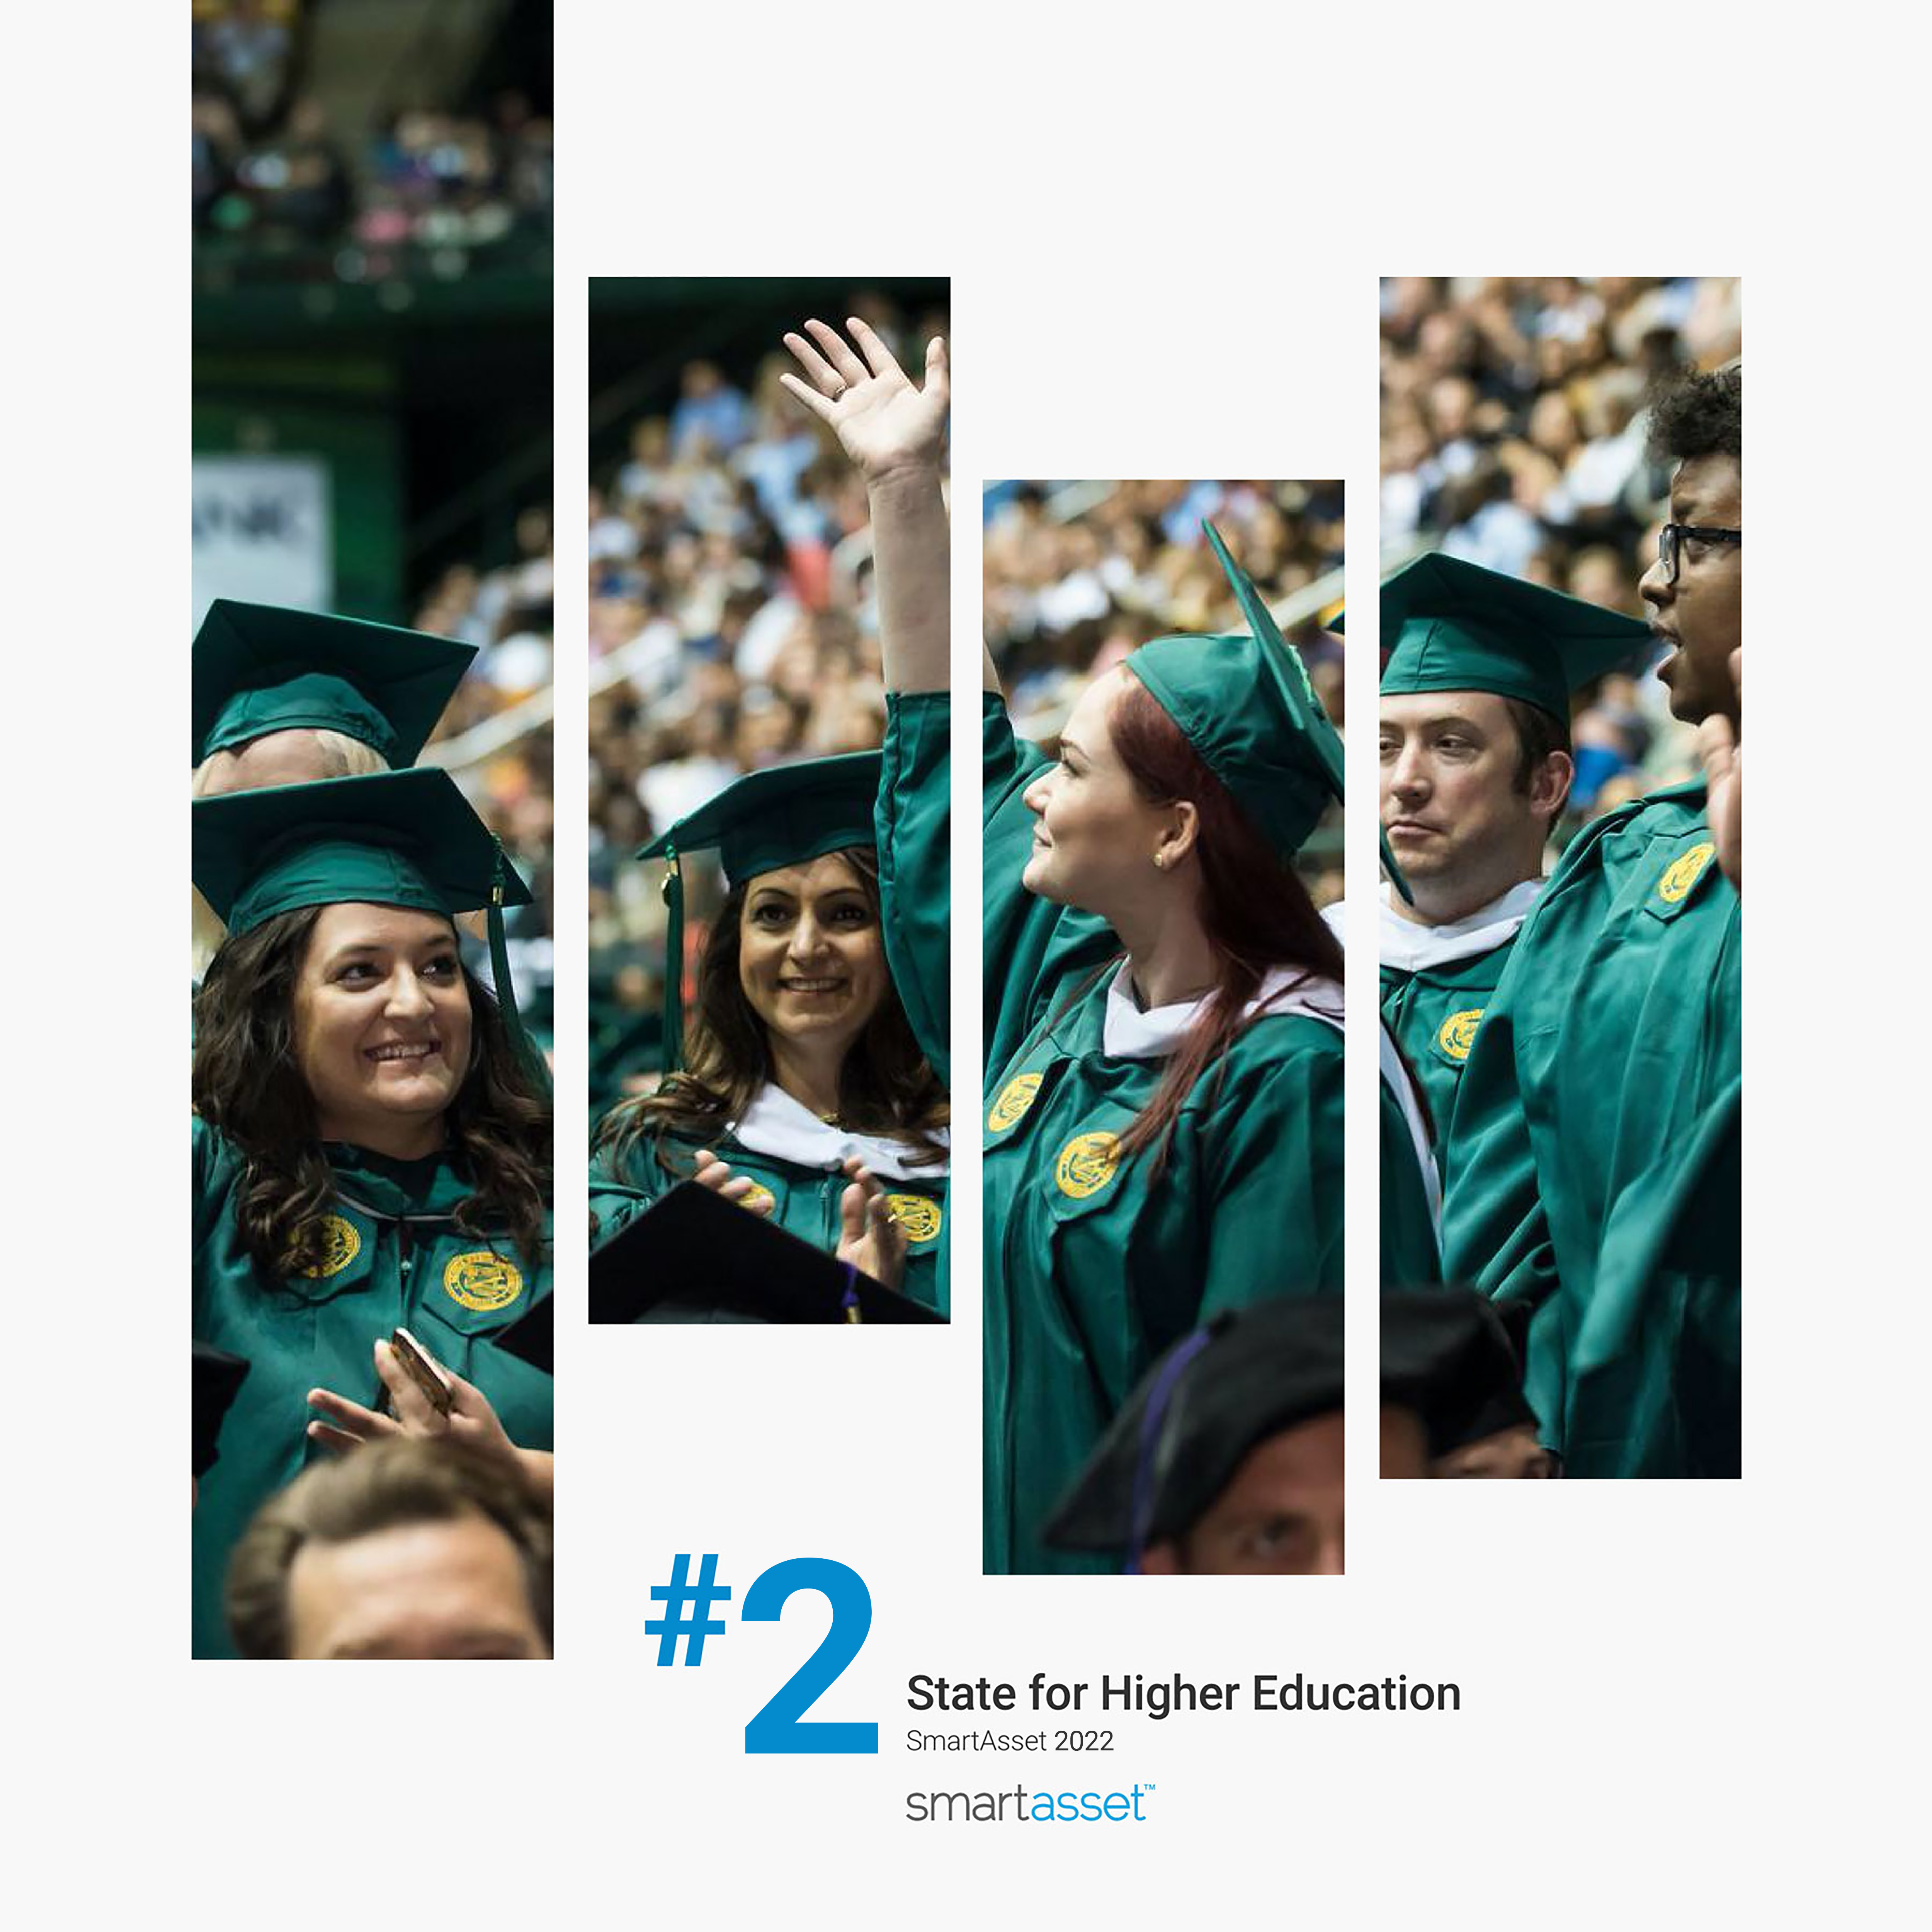 talent_university-grads_2-for-higher-education